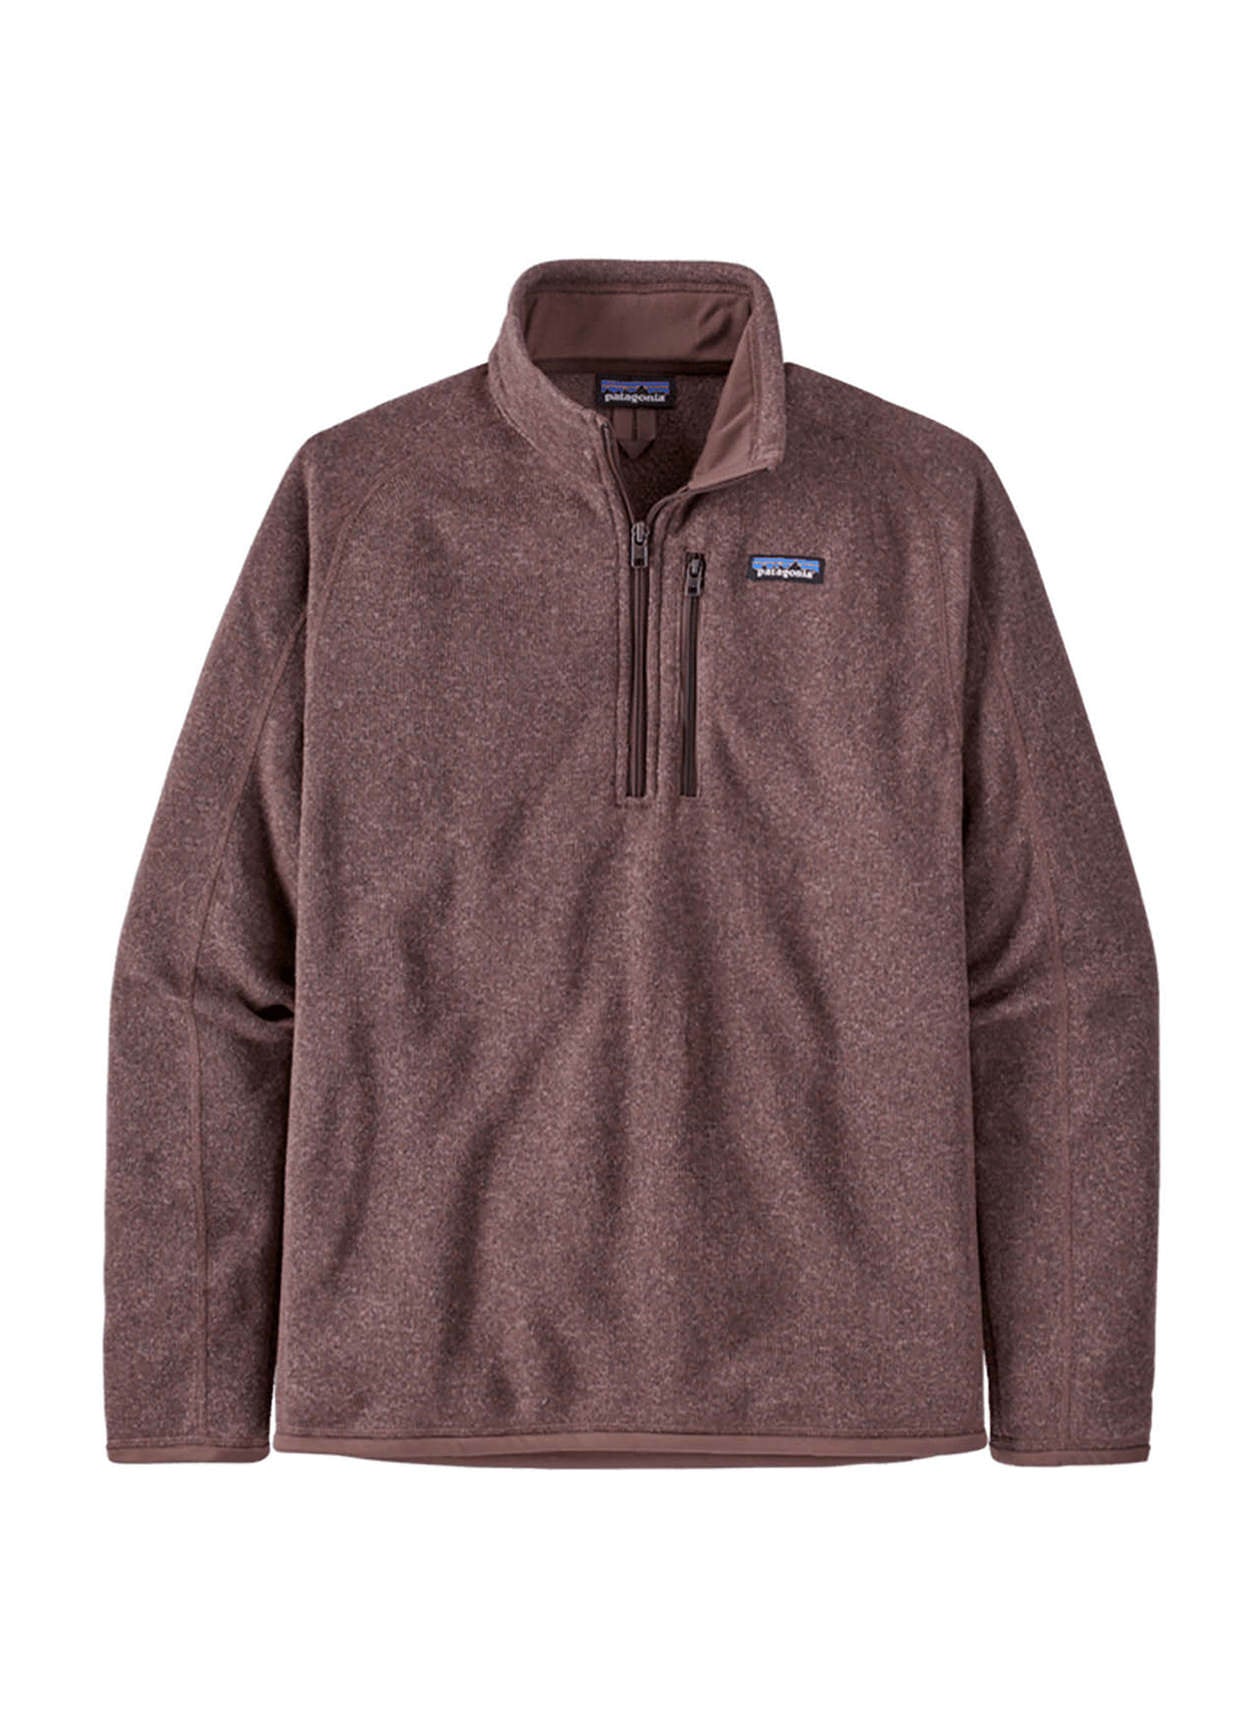 Patagonia Men's Better Sweater Quarter-Zip